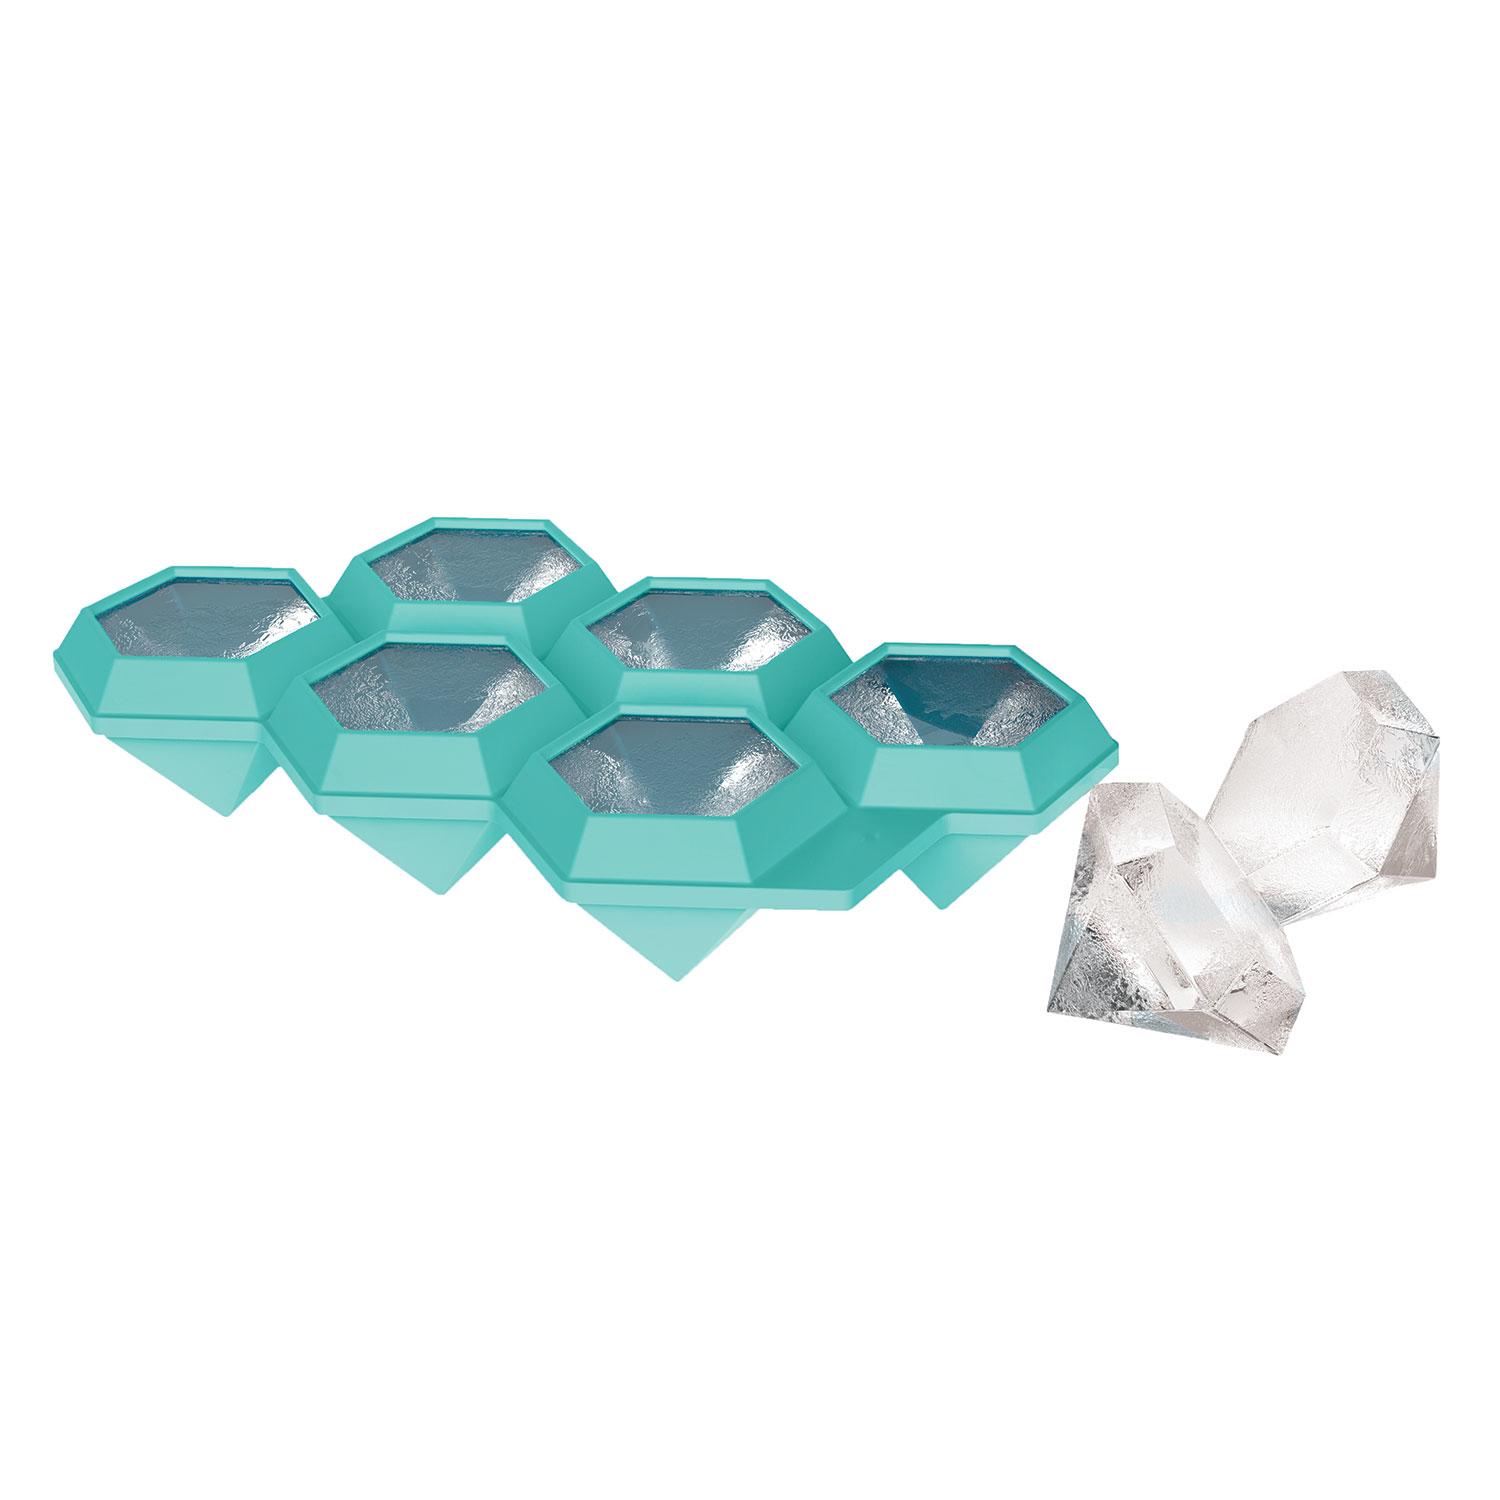 Uberstar Diamond Ice Tray - Only £8.99